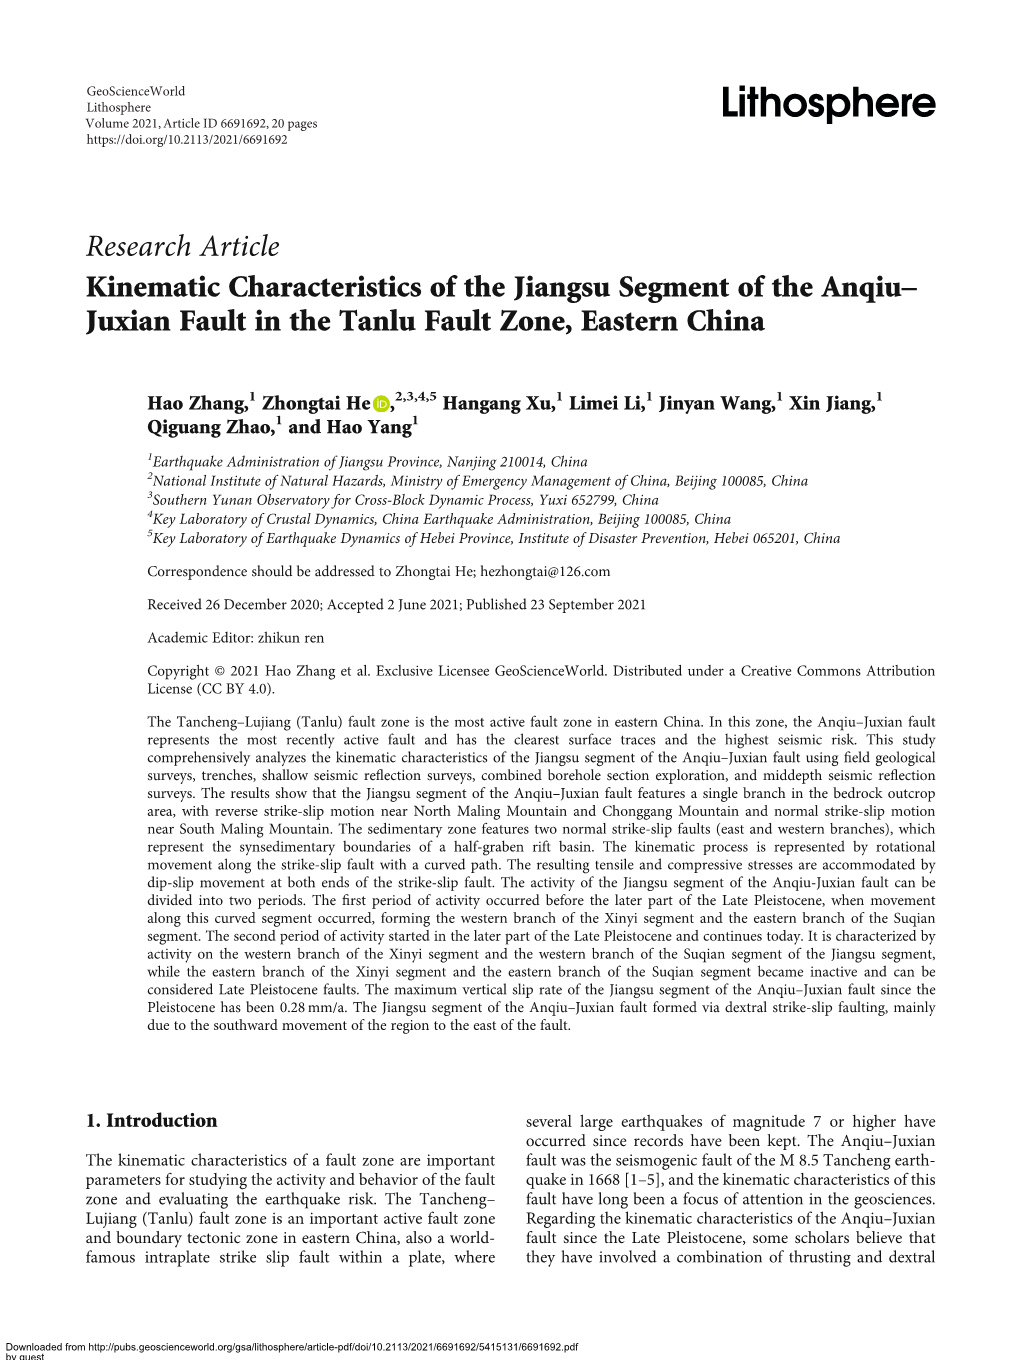 Research Article Kinematic Characteristics of the Jiangsu Segment of the Anqiu– Juxian Fault in the Tanlu Fault Zone, Eastern China